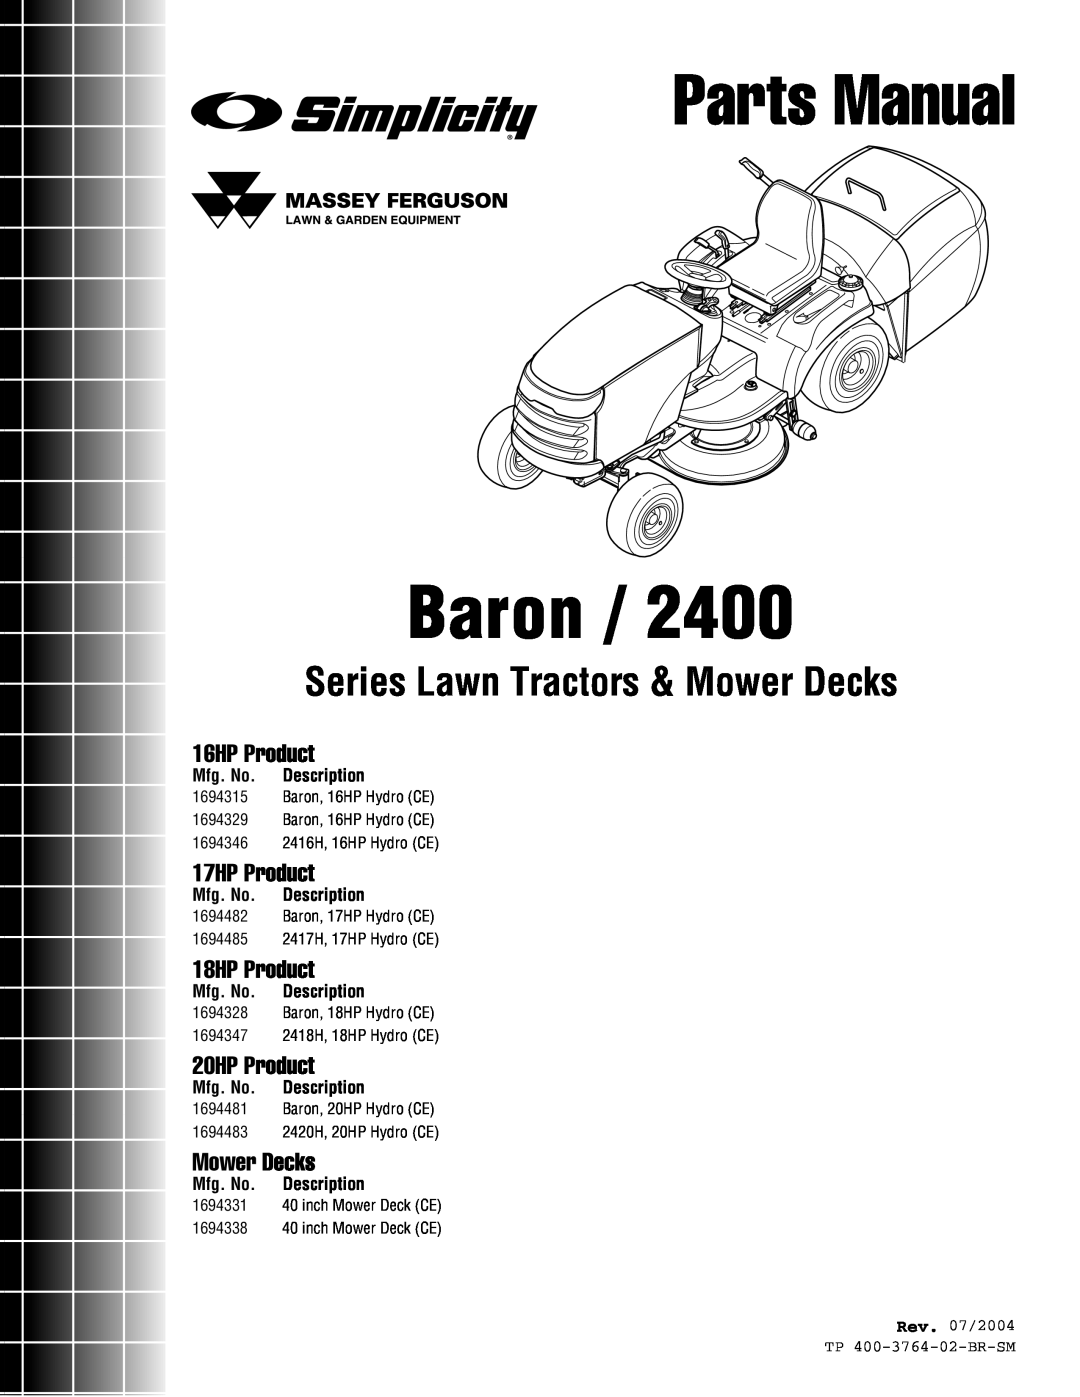 Simplicity Baron / 2400 manual Mfg. No. Description, Parts Manual, Series Lawn Tractors & Mower Decks, 16HP Product 